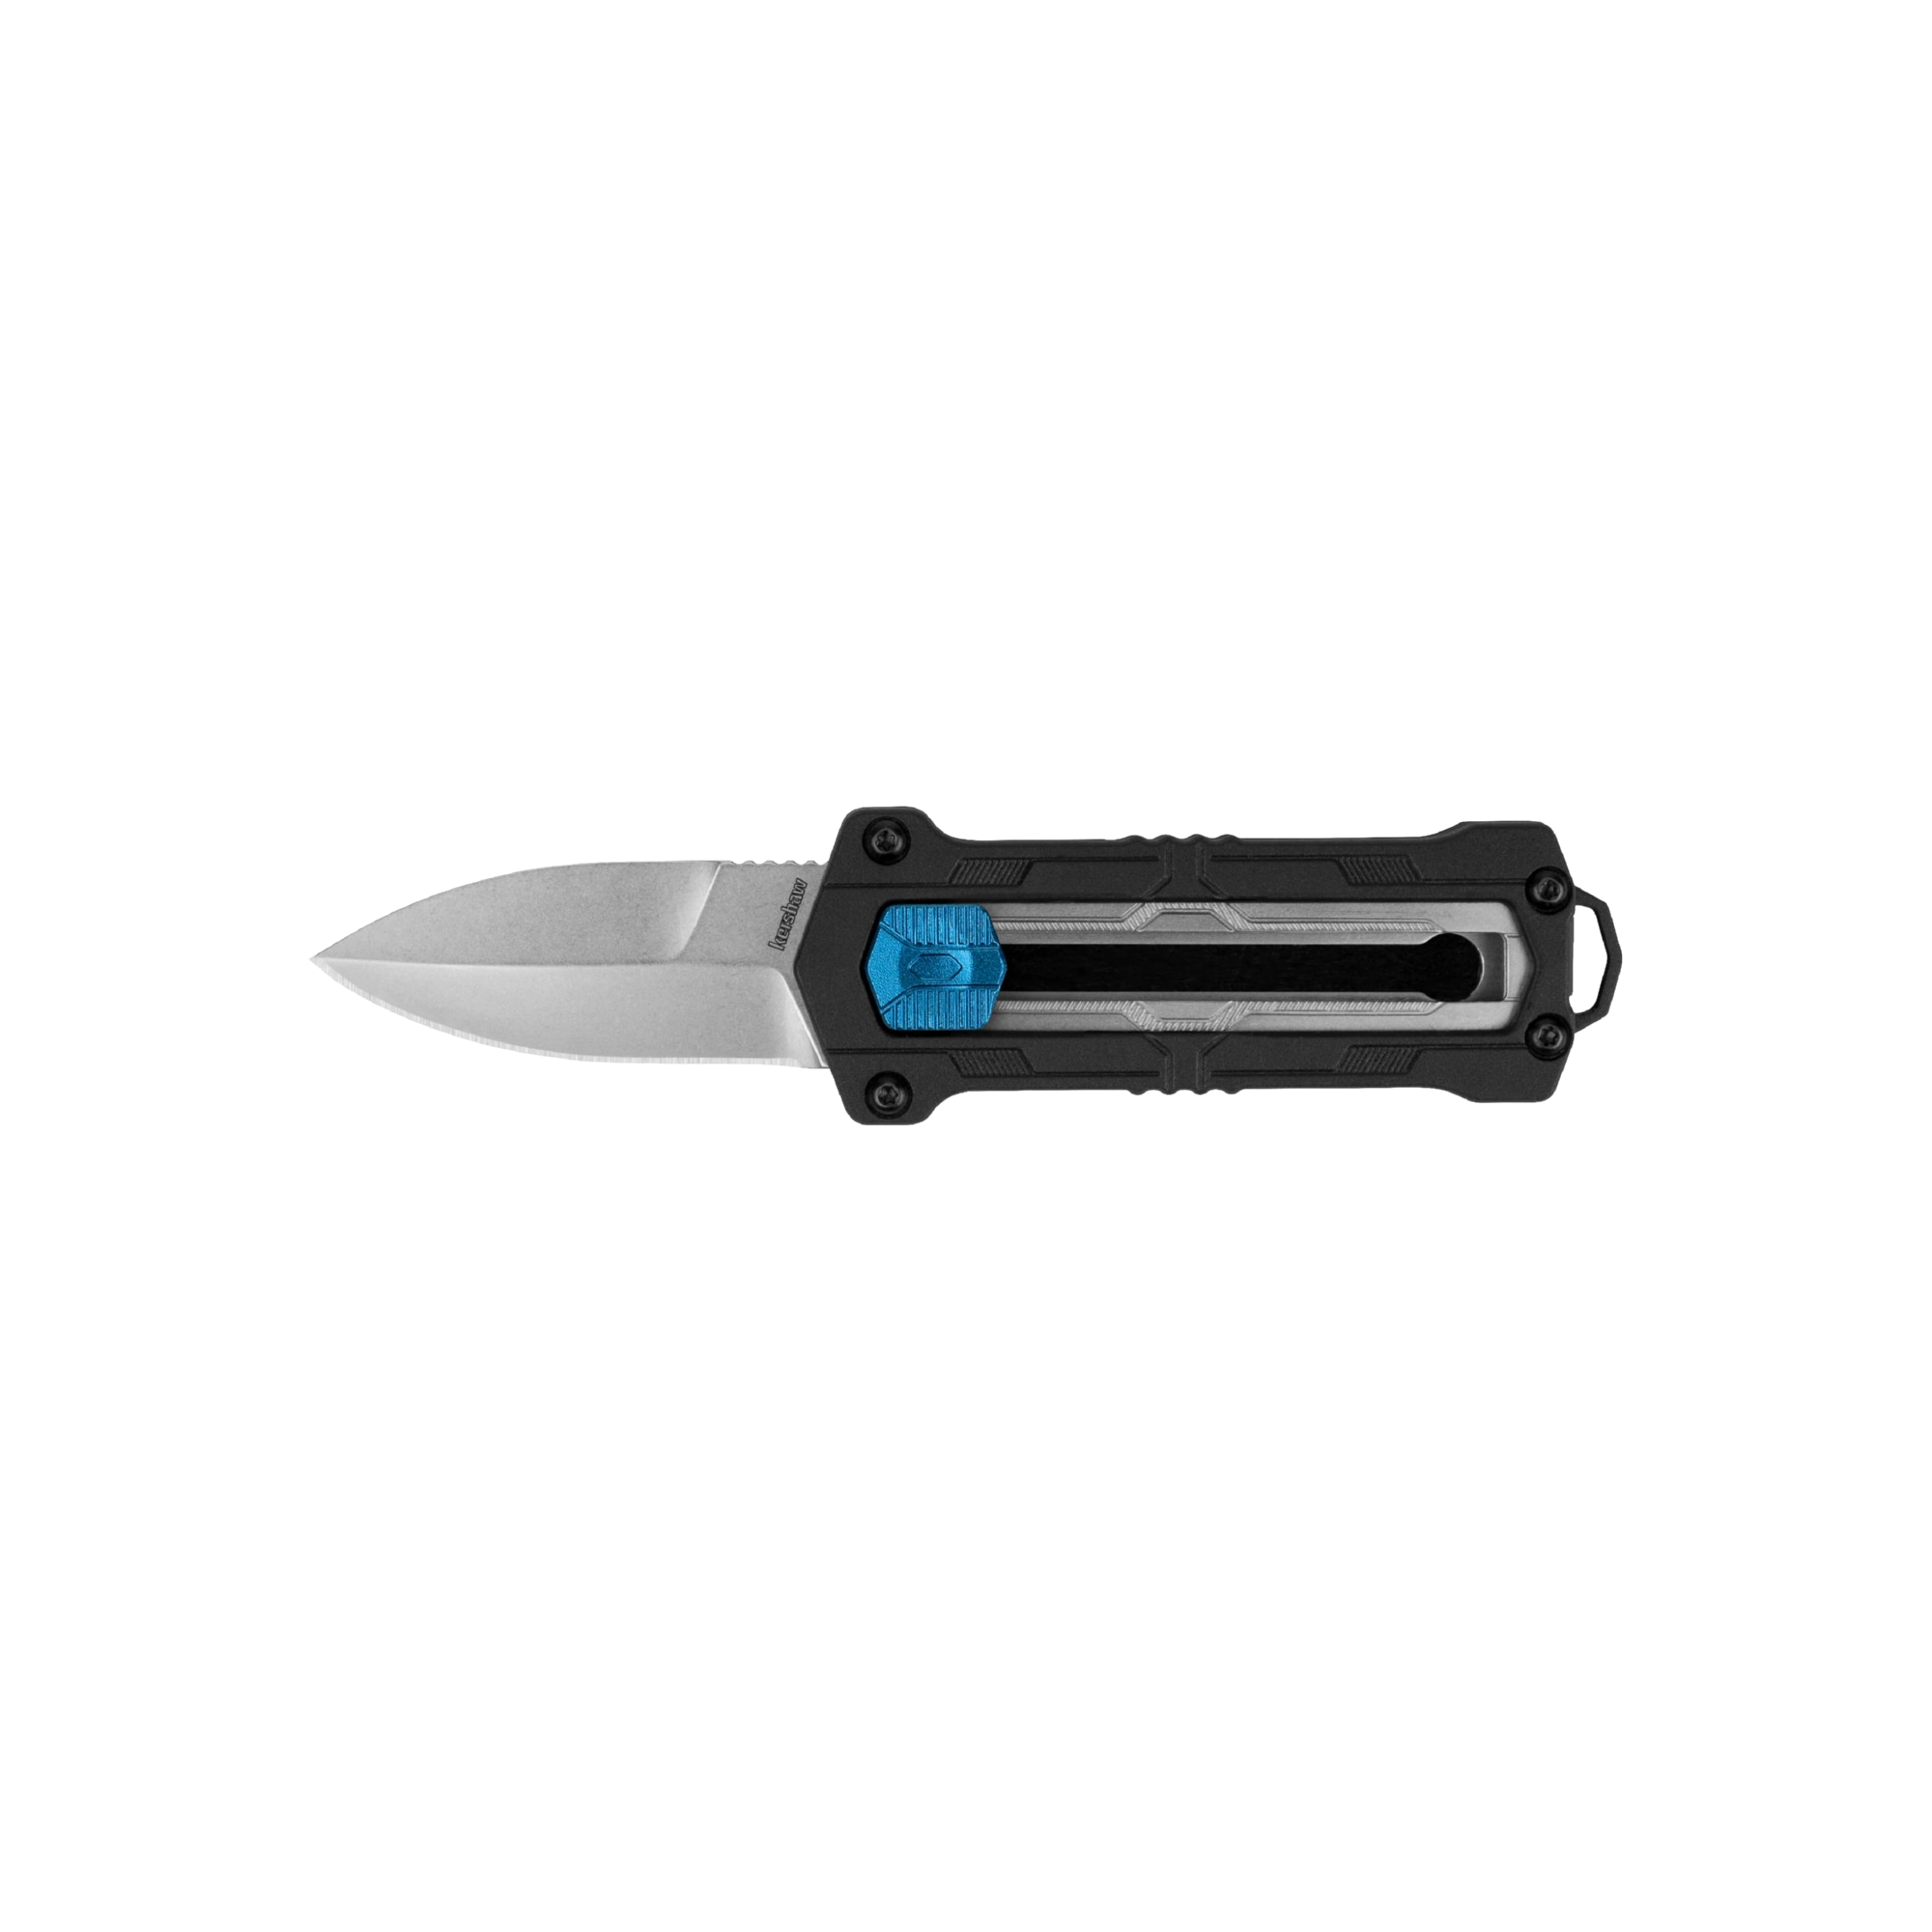 Kapsule Pocketknife